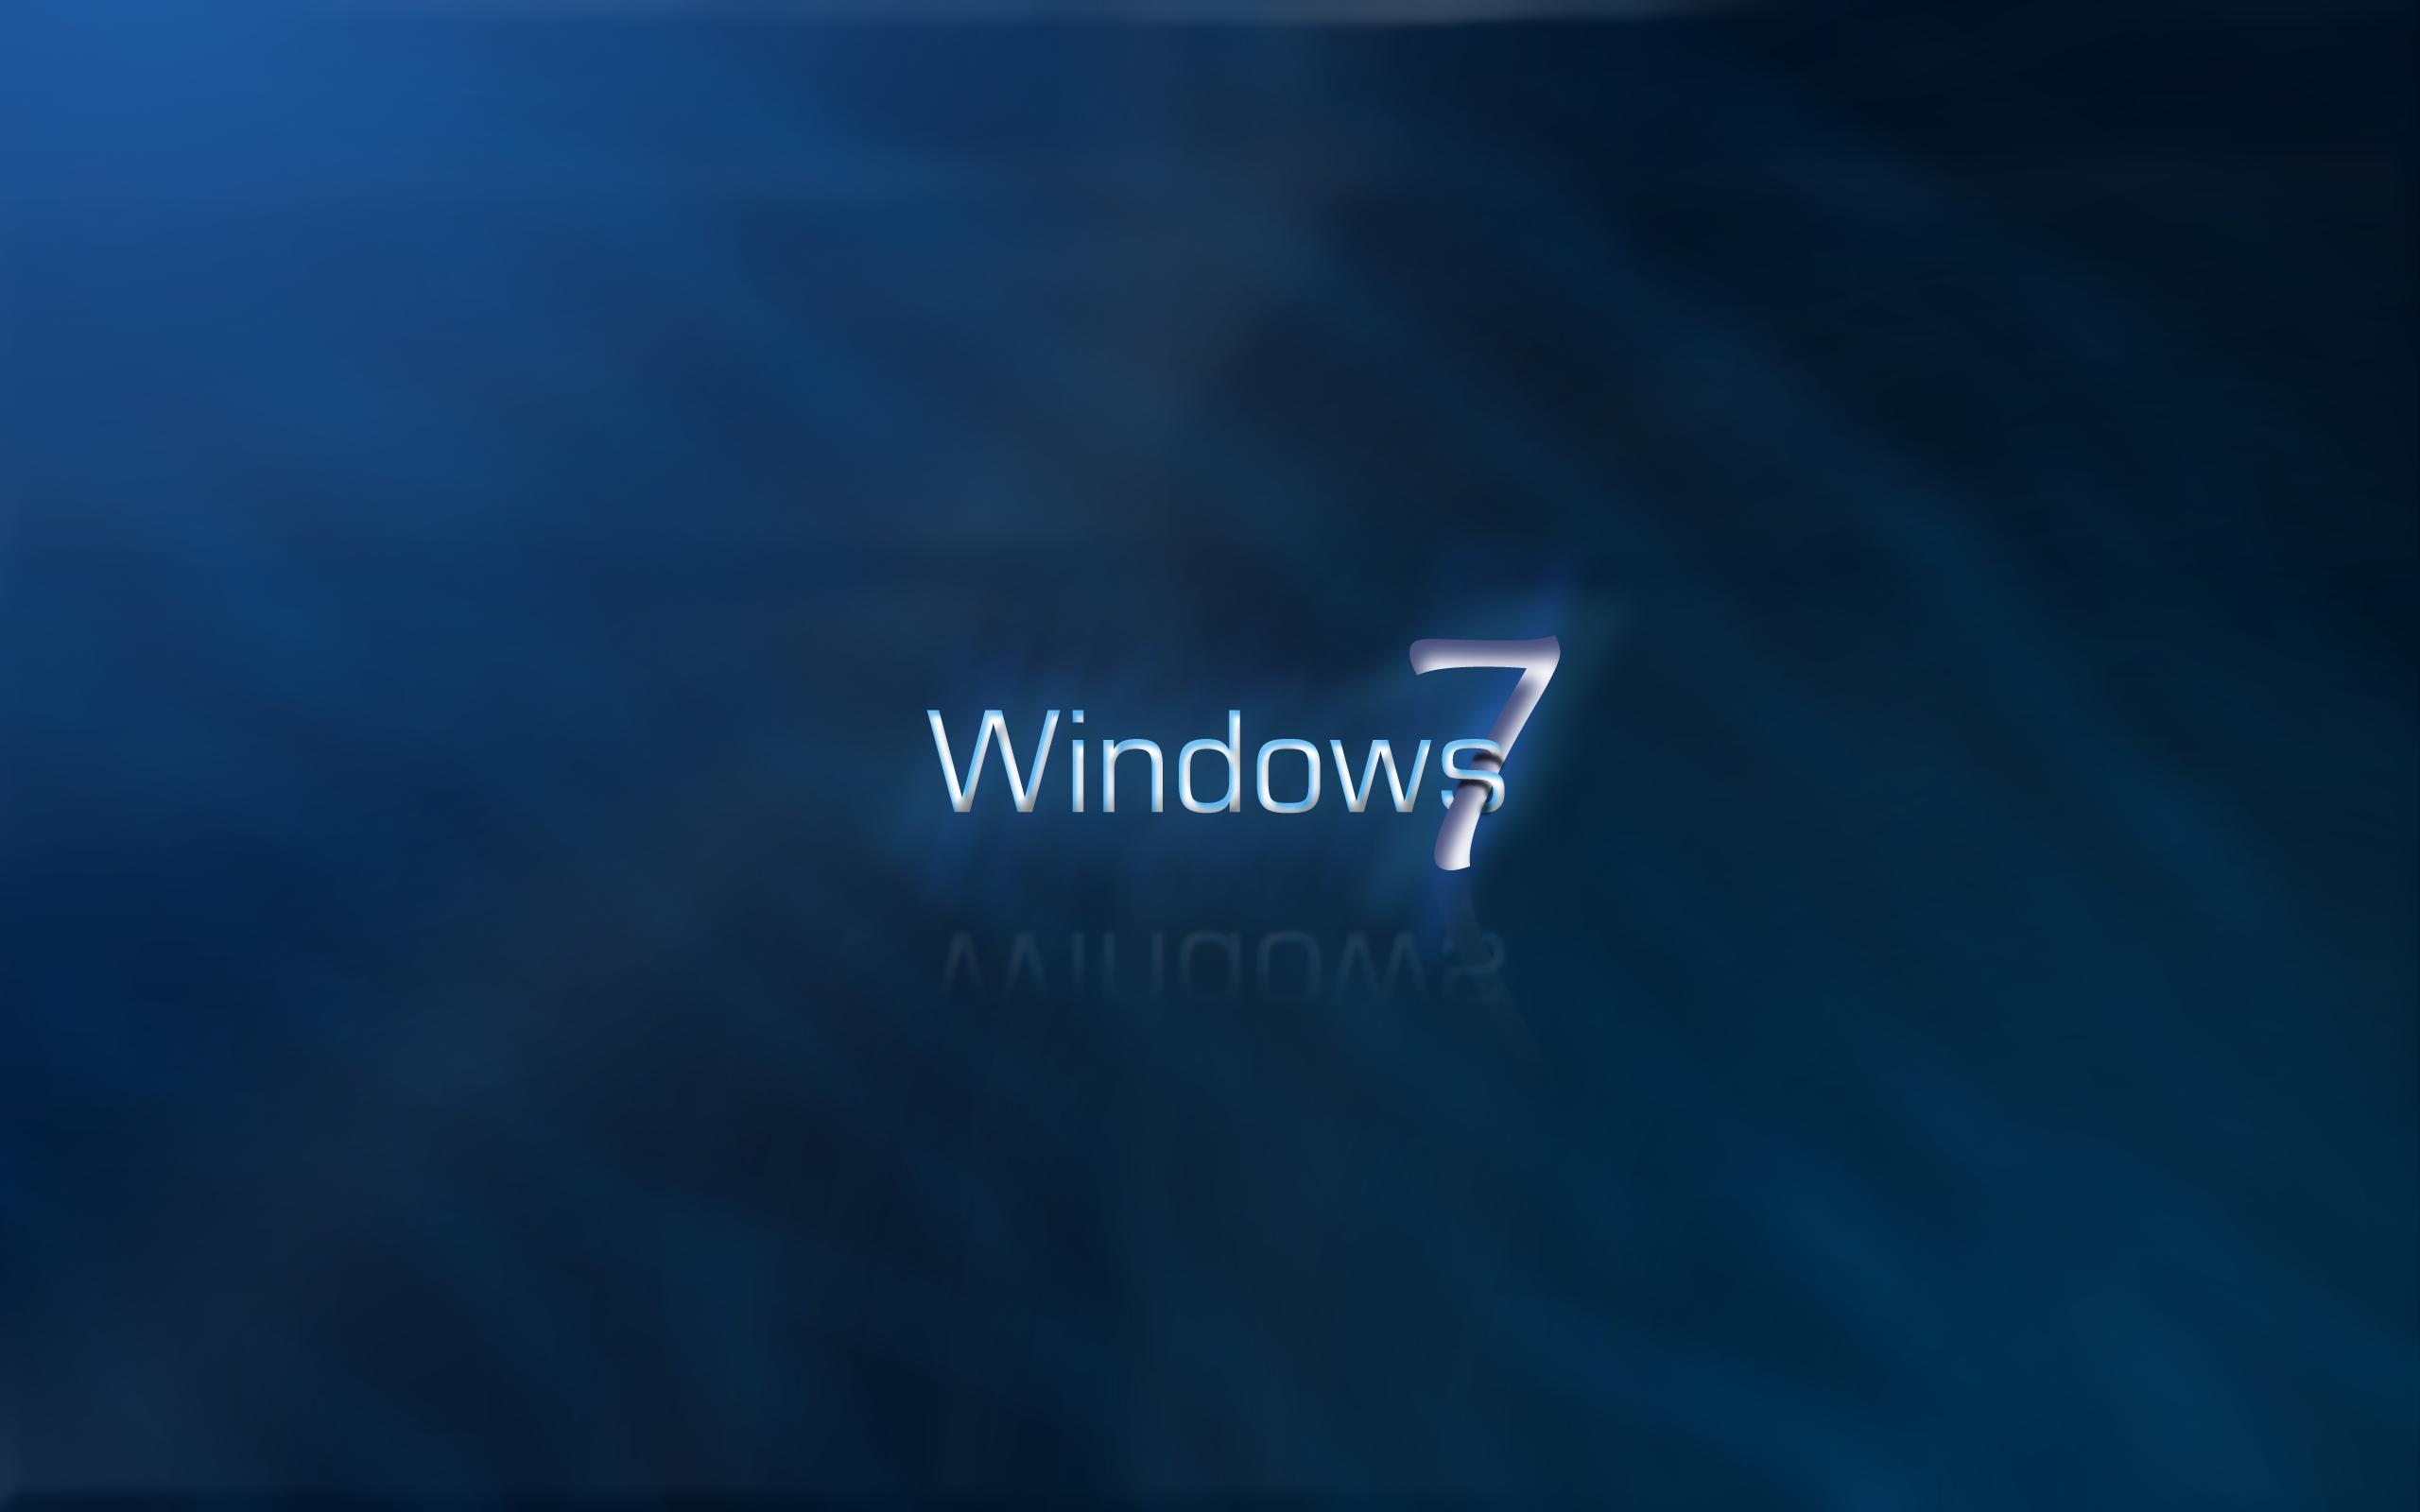 Microsoft Windows 7 Wallpaper Pictures 23517 #4694 Wallpaper ...